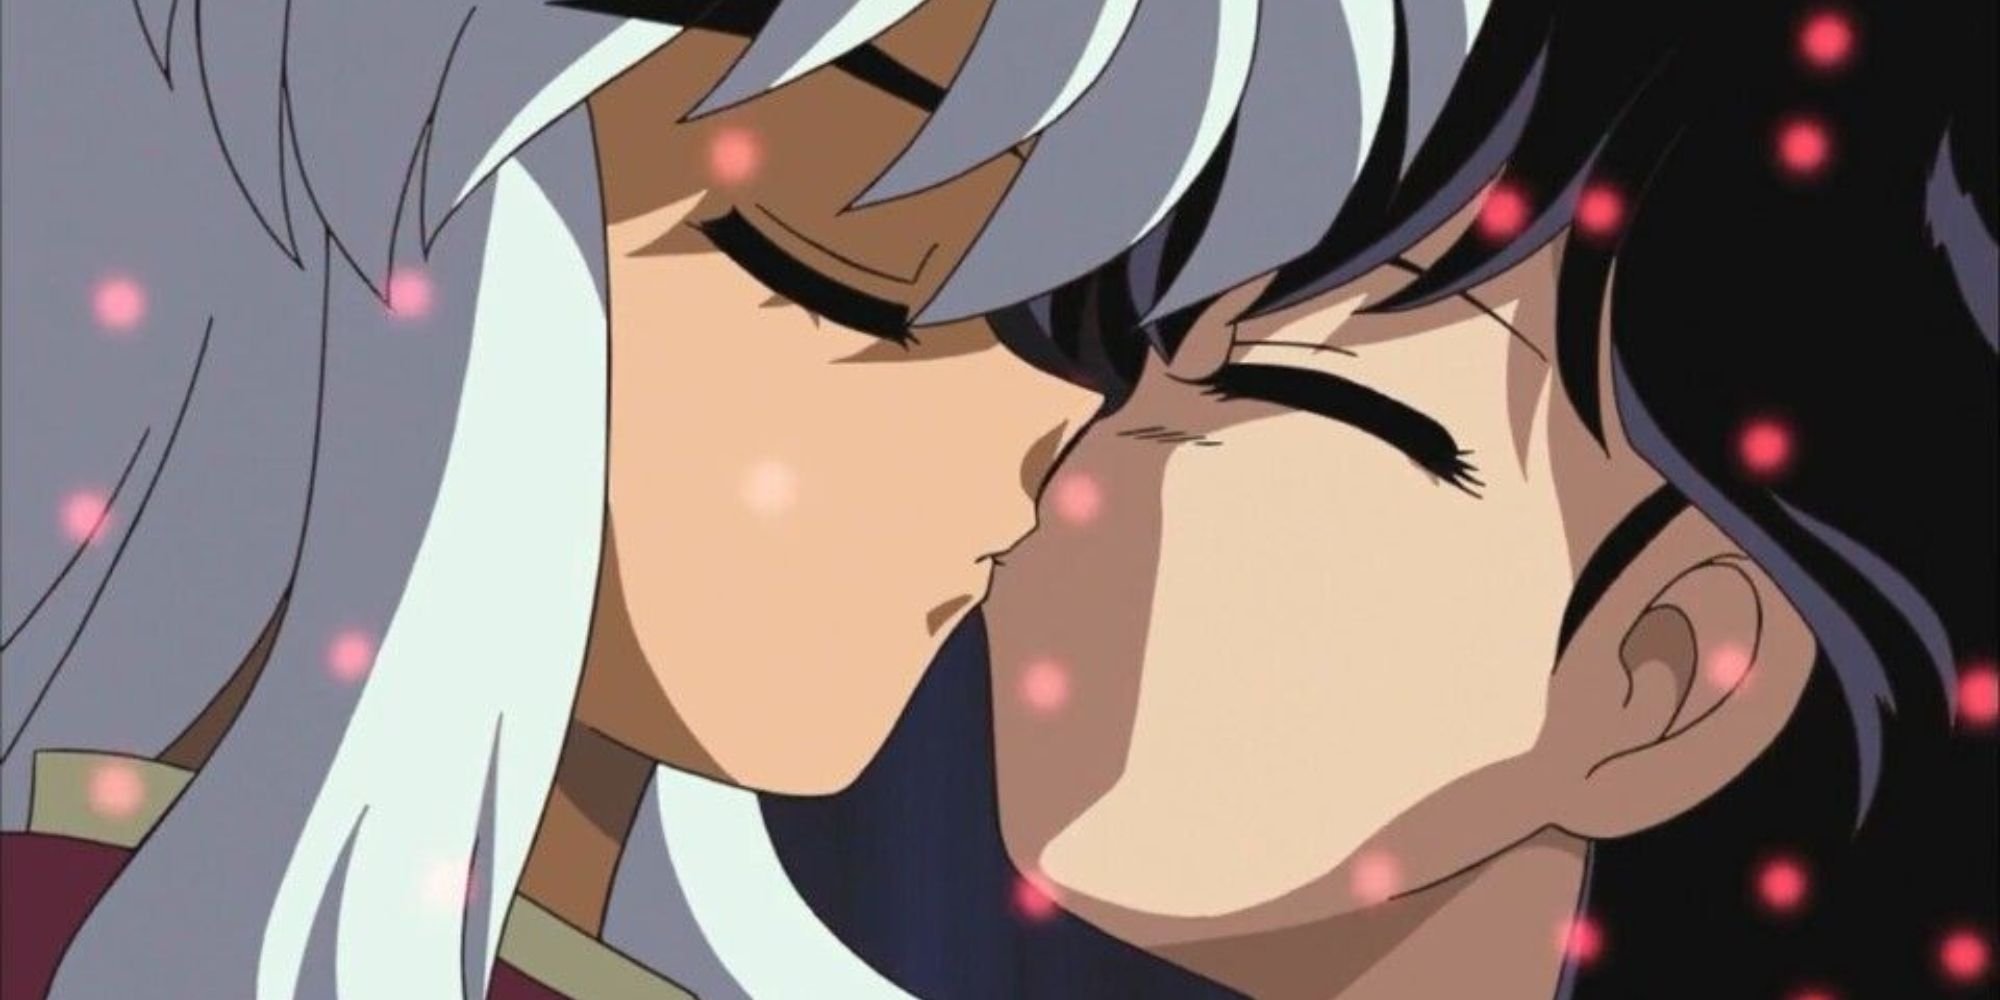 Engage Kiss (anime) | Project Engage Wiki | Fandom